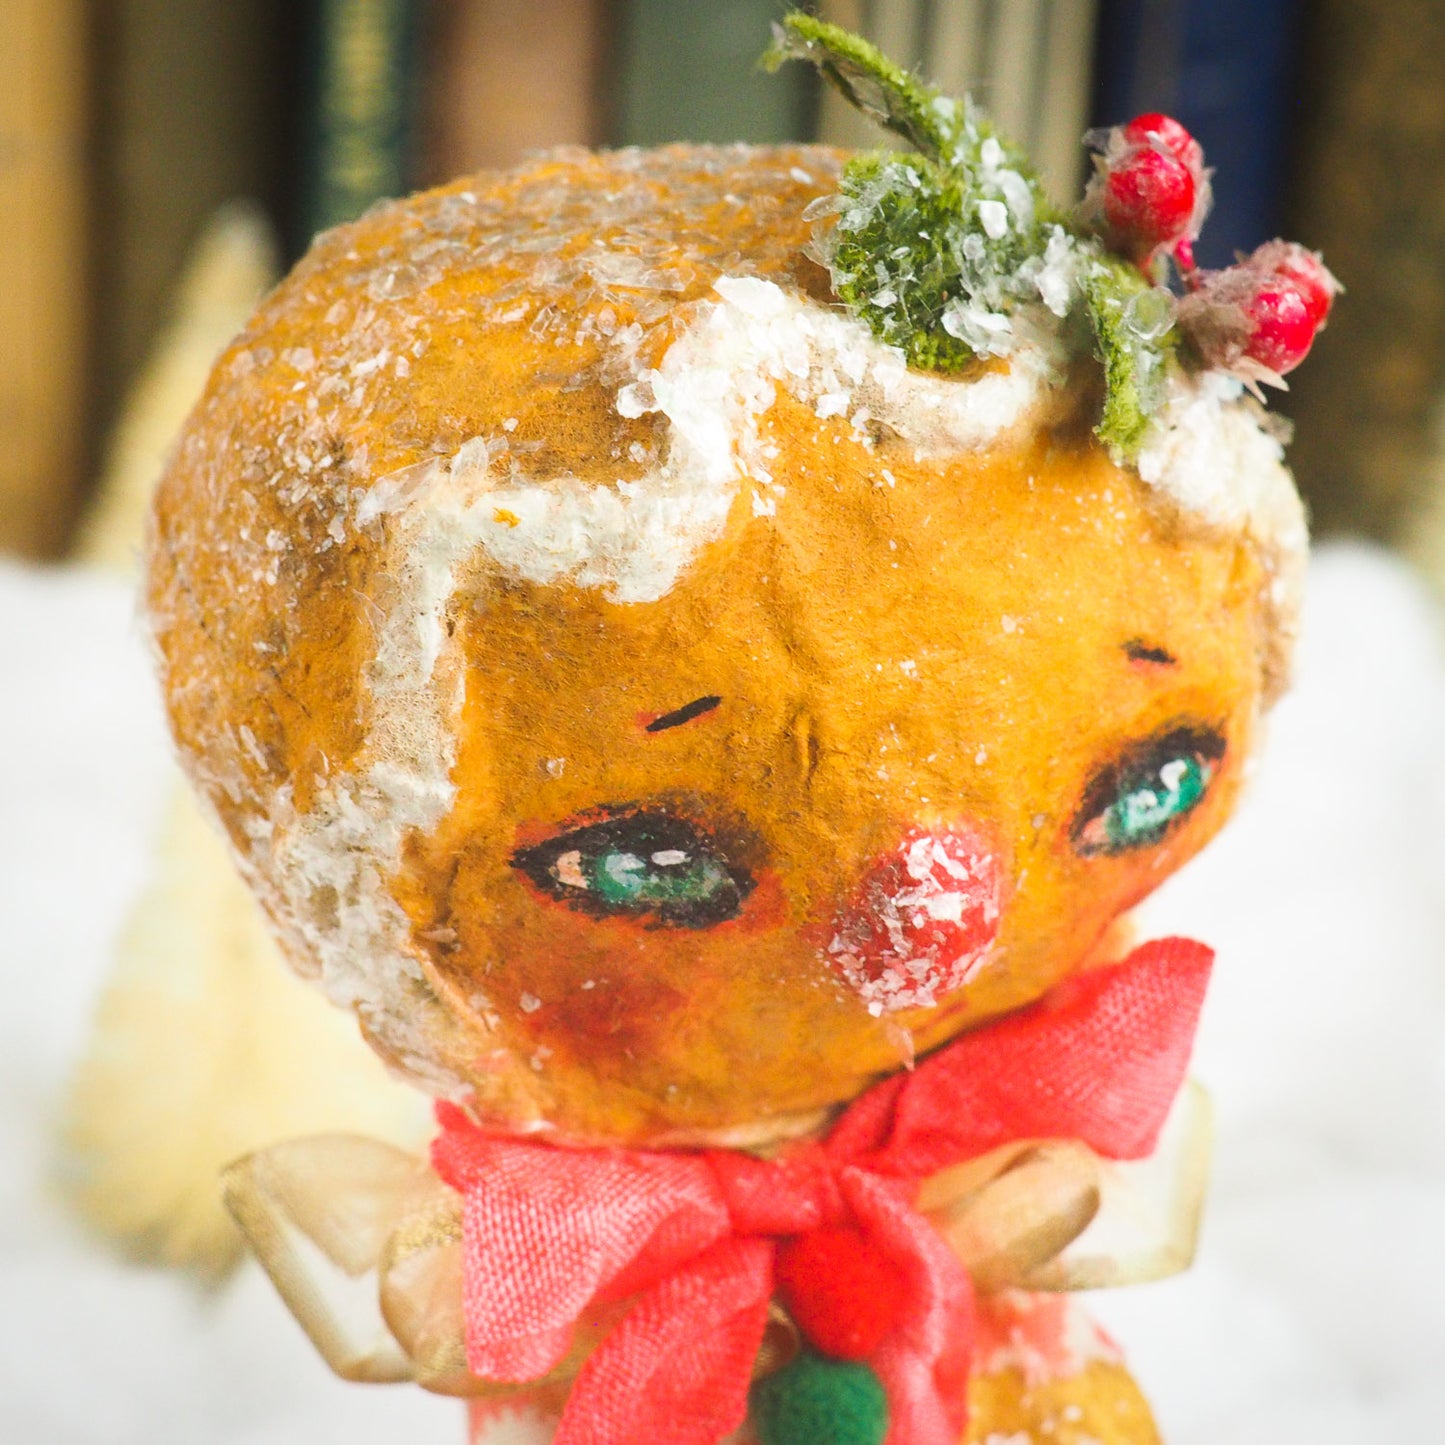 Handmade ginger bread Christmas tree ornament doll by Danita. Whimsical folk art spun cotton home decor figurine for Holiday season, covered in vintage mica.